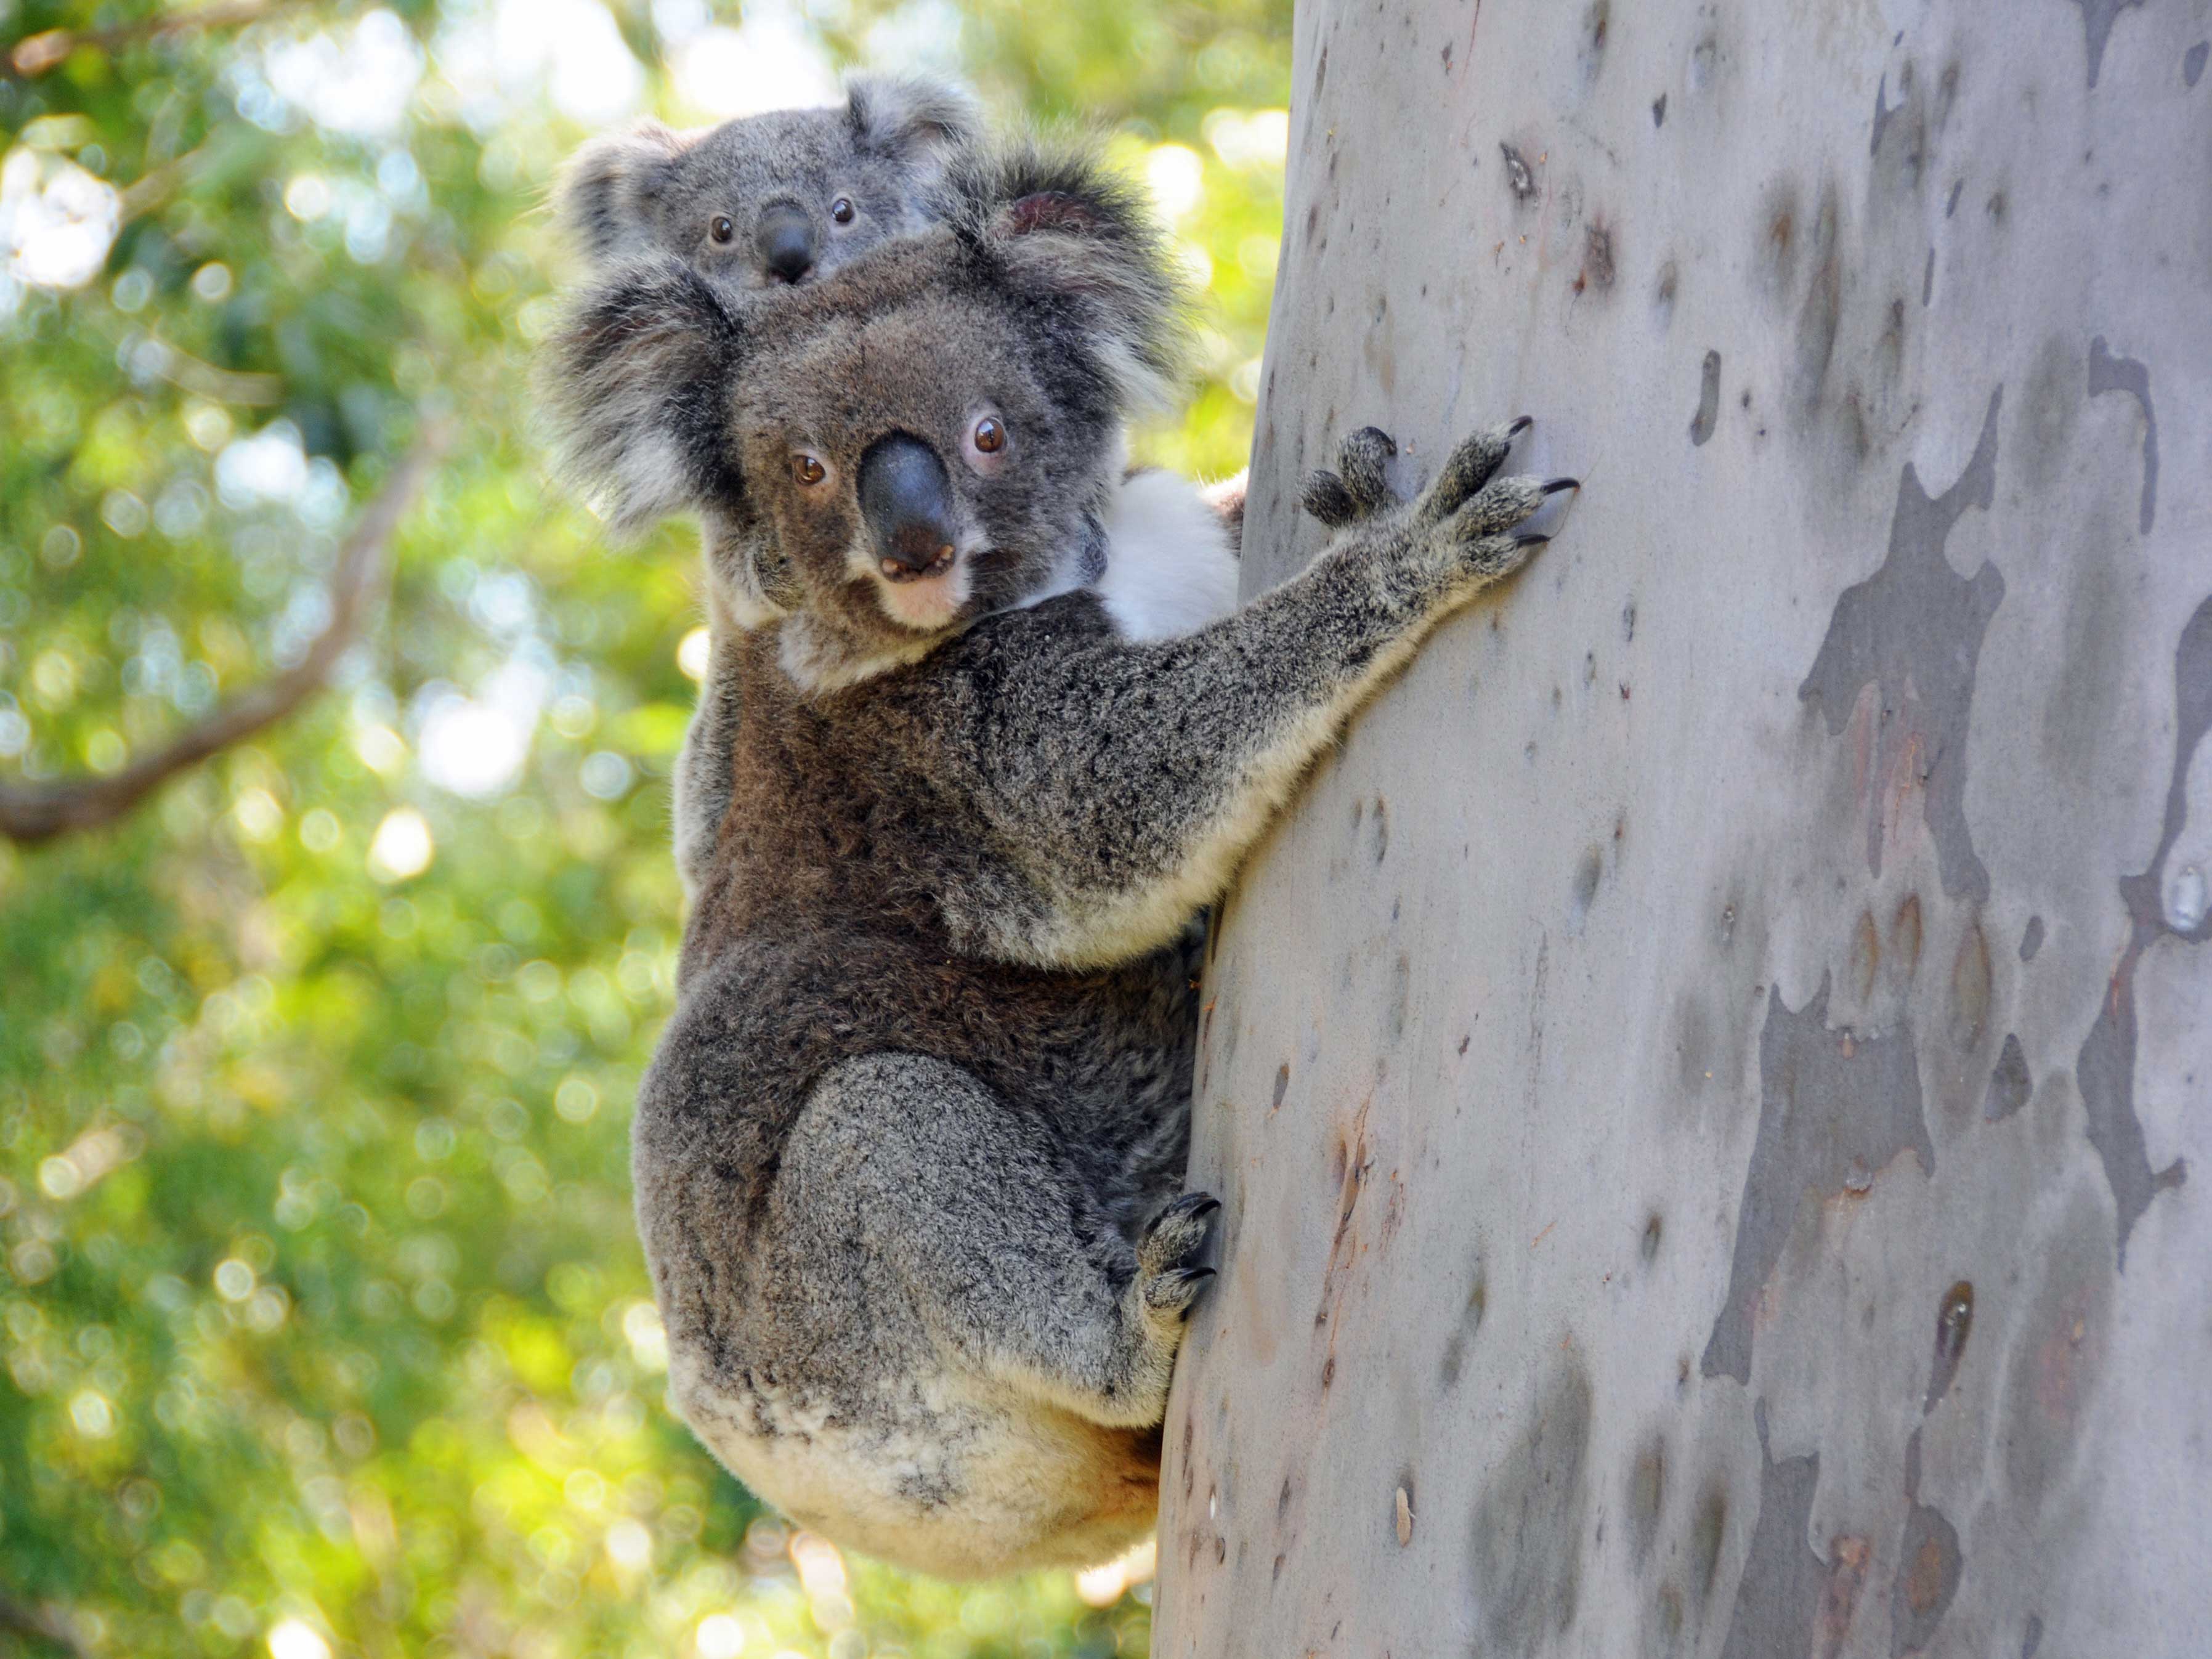 Koalas classified as an endangered species in parts of eastern Australia